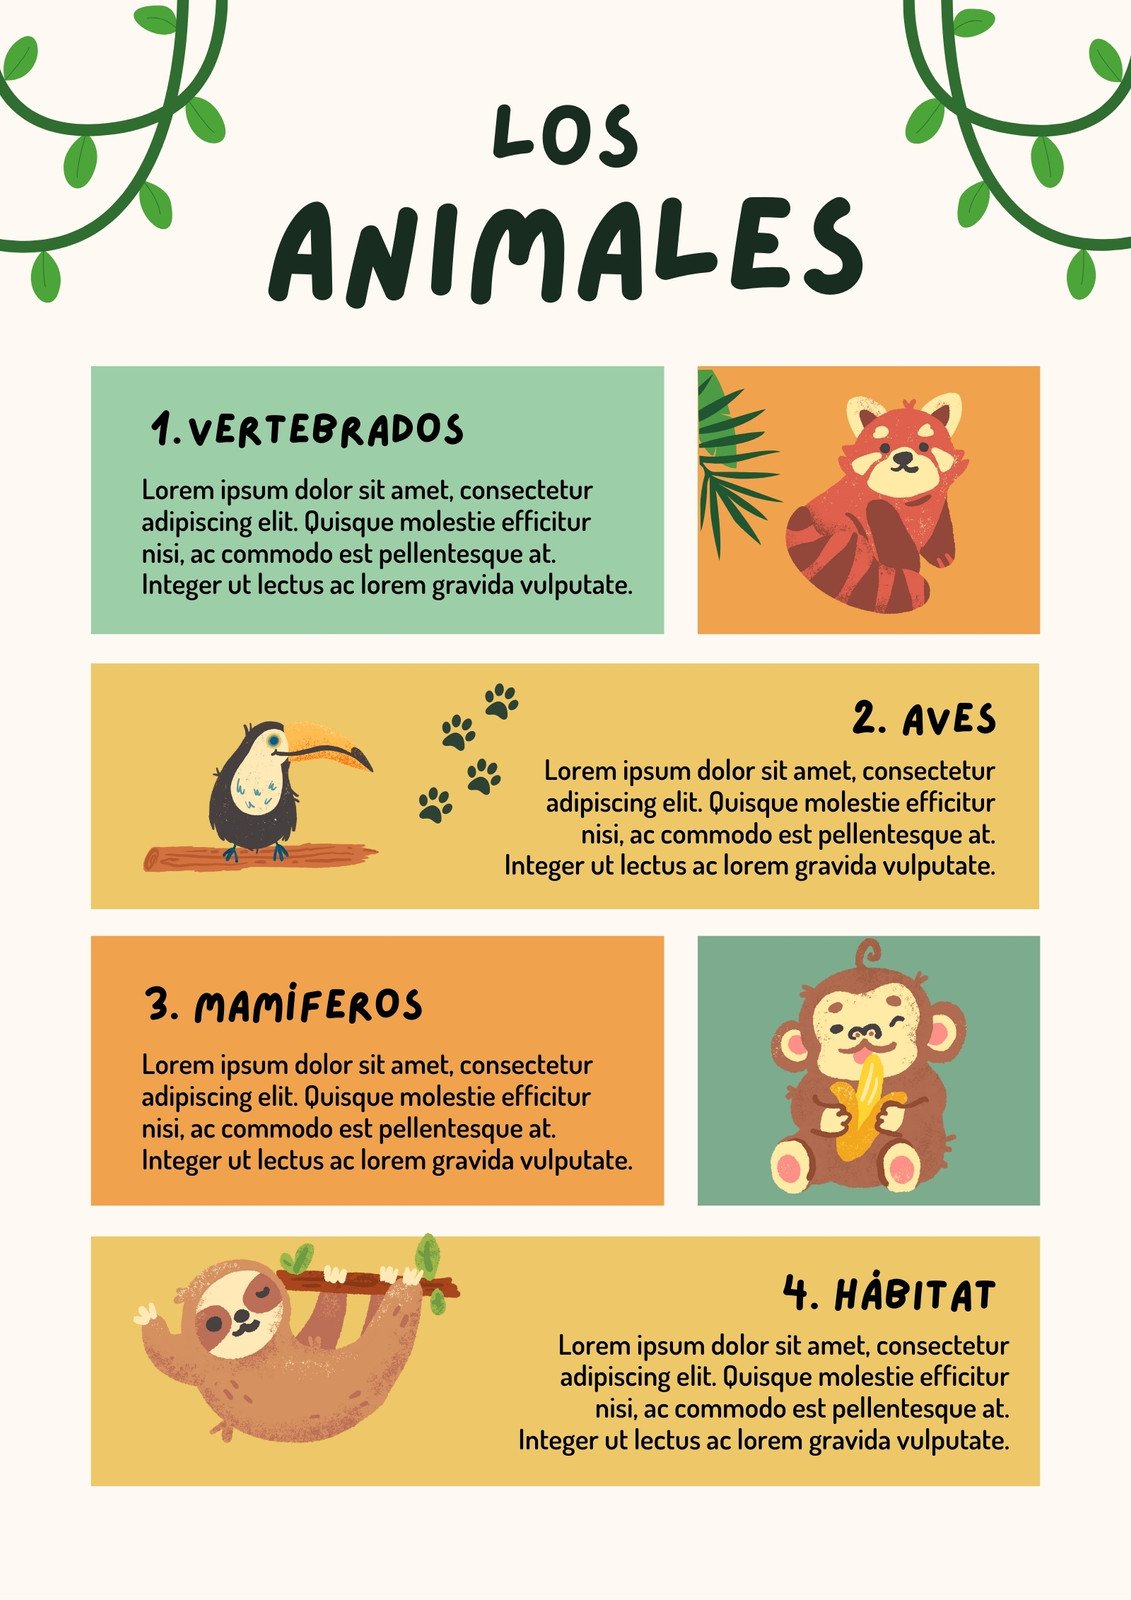 animales vertebrados laminas - Buscar con Google  Imagenes de animales  vertebrados, Animales vertebrados, Los animales vertebrados